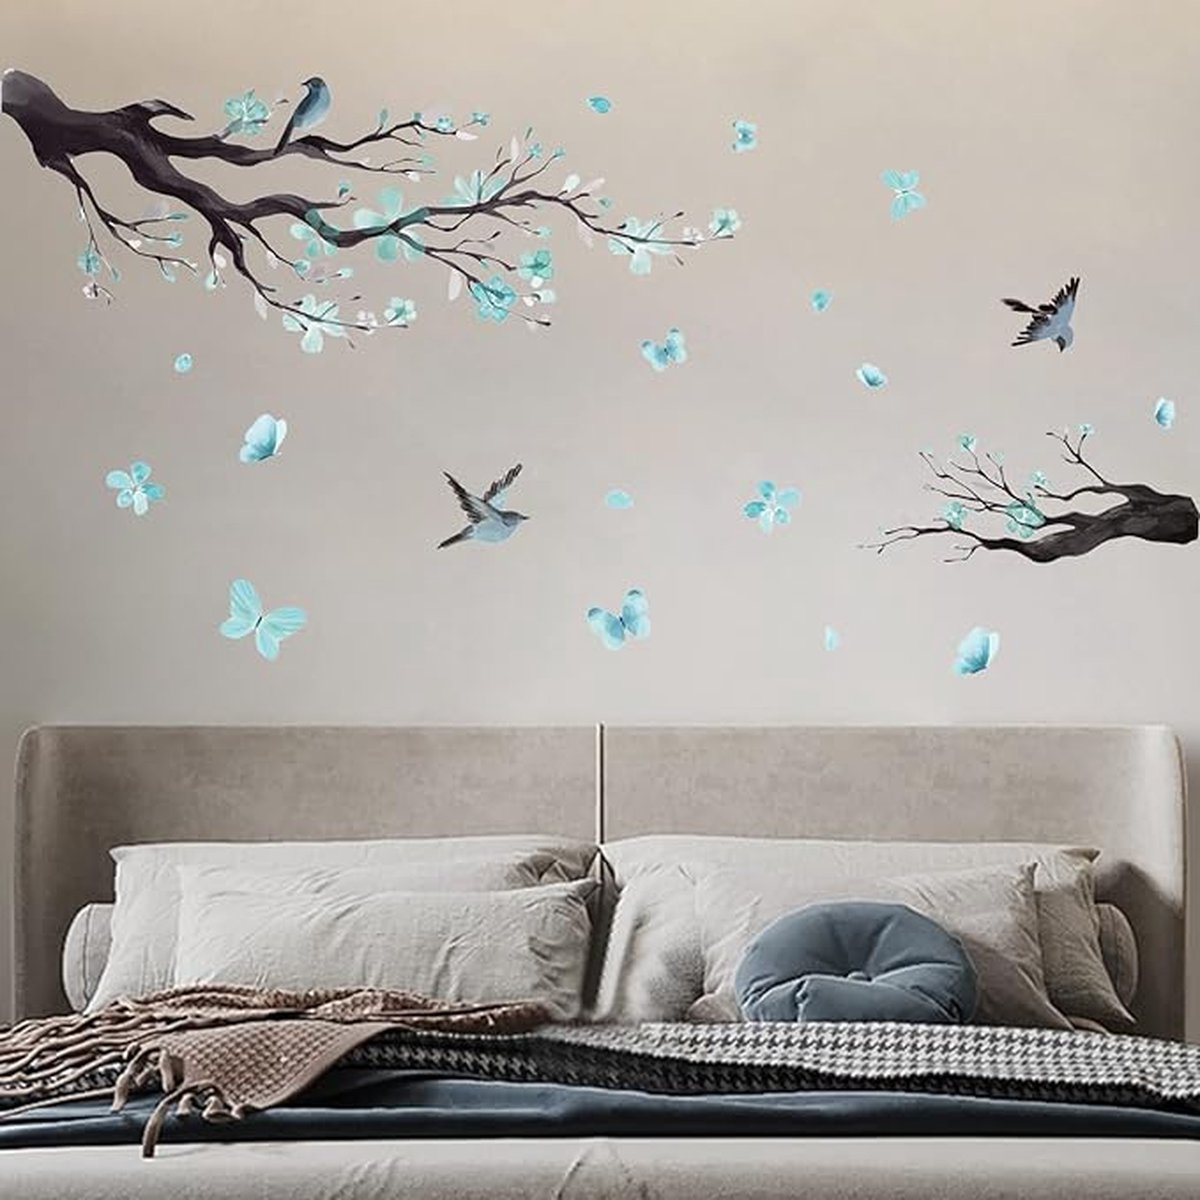 Muursticker fleurs bleues sticker mural branches oiseaux papillon